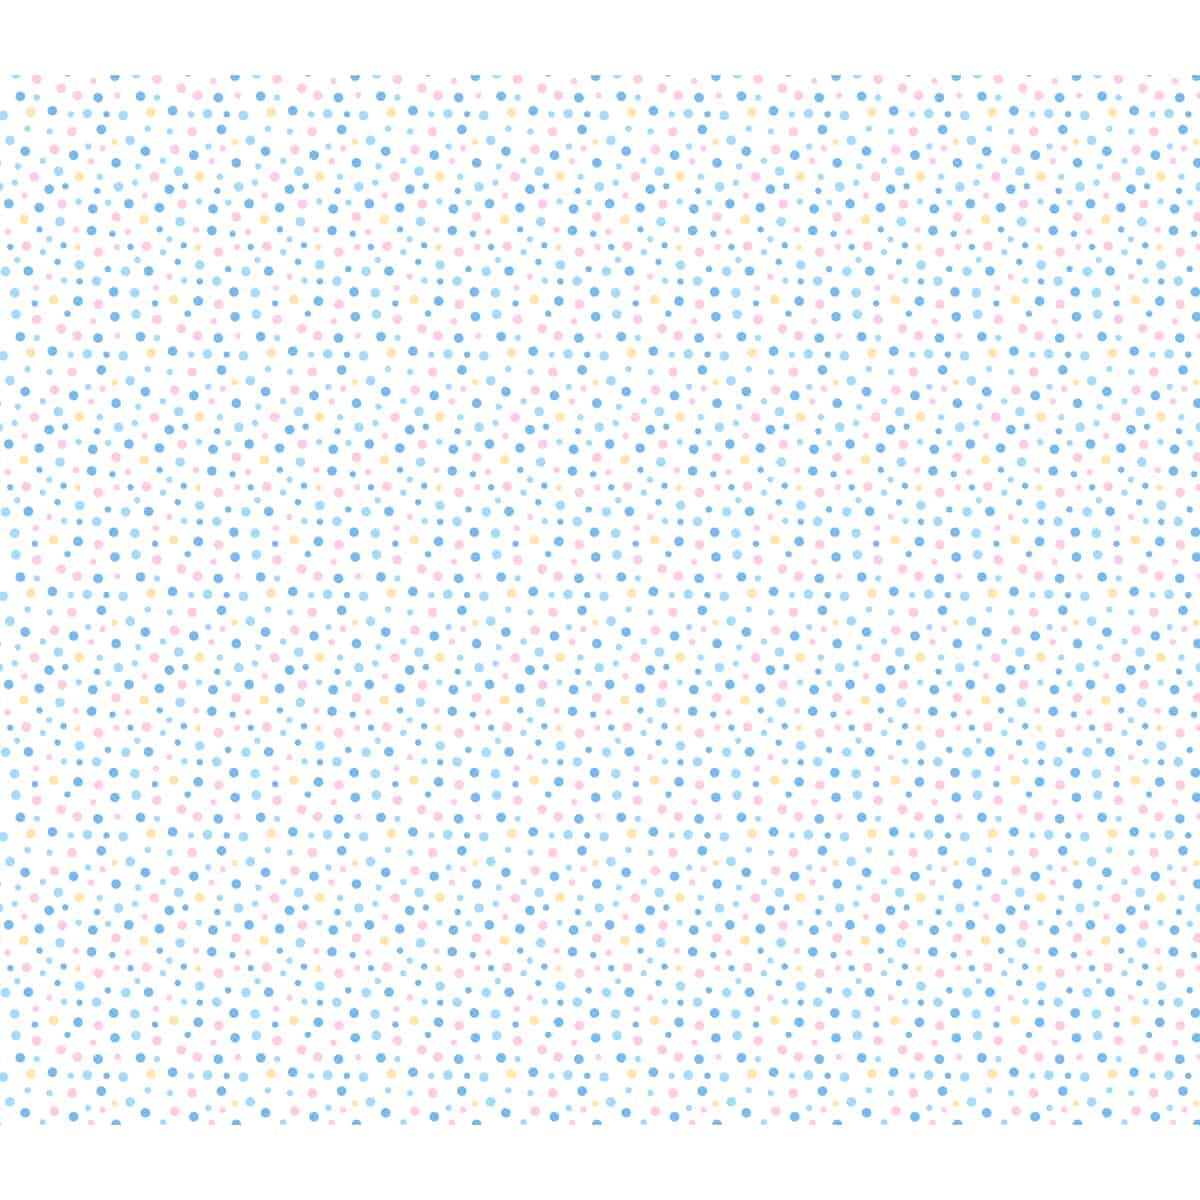 Polka dots Pattern Design Wallpaper for Kids Room